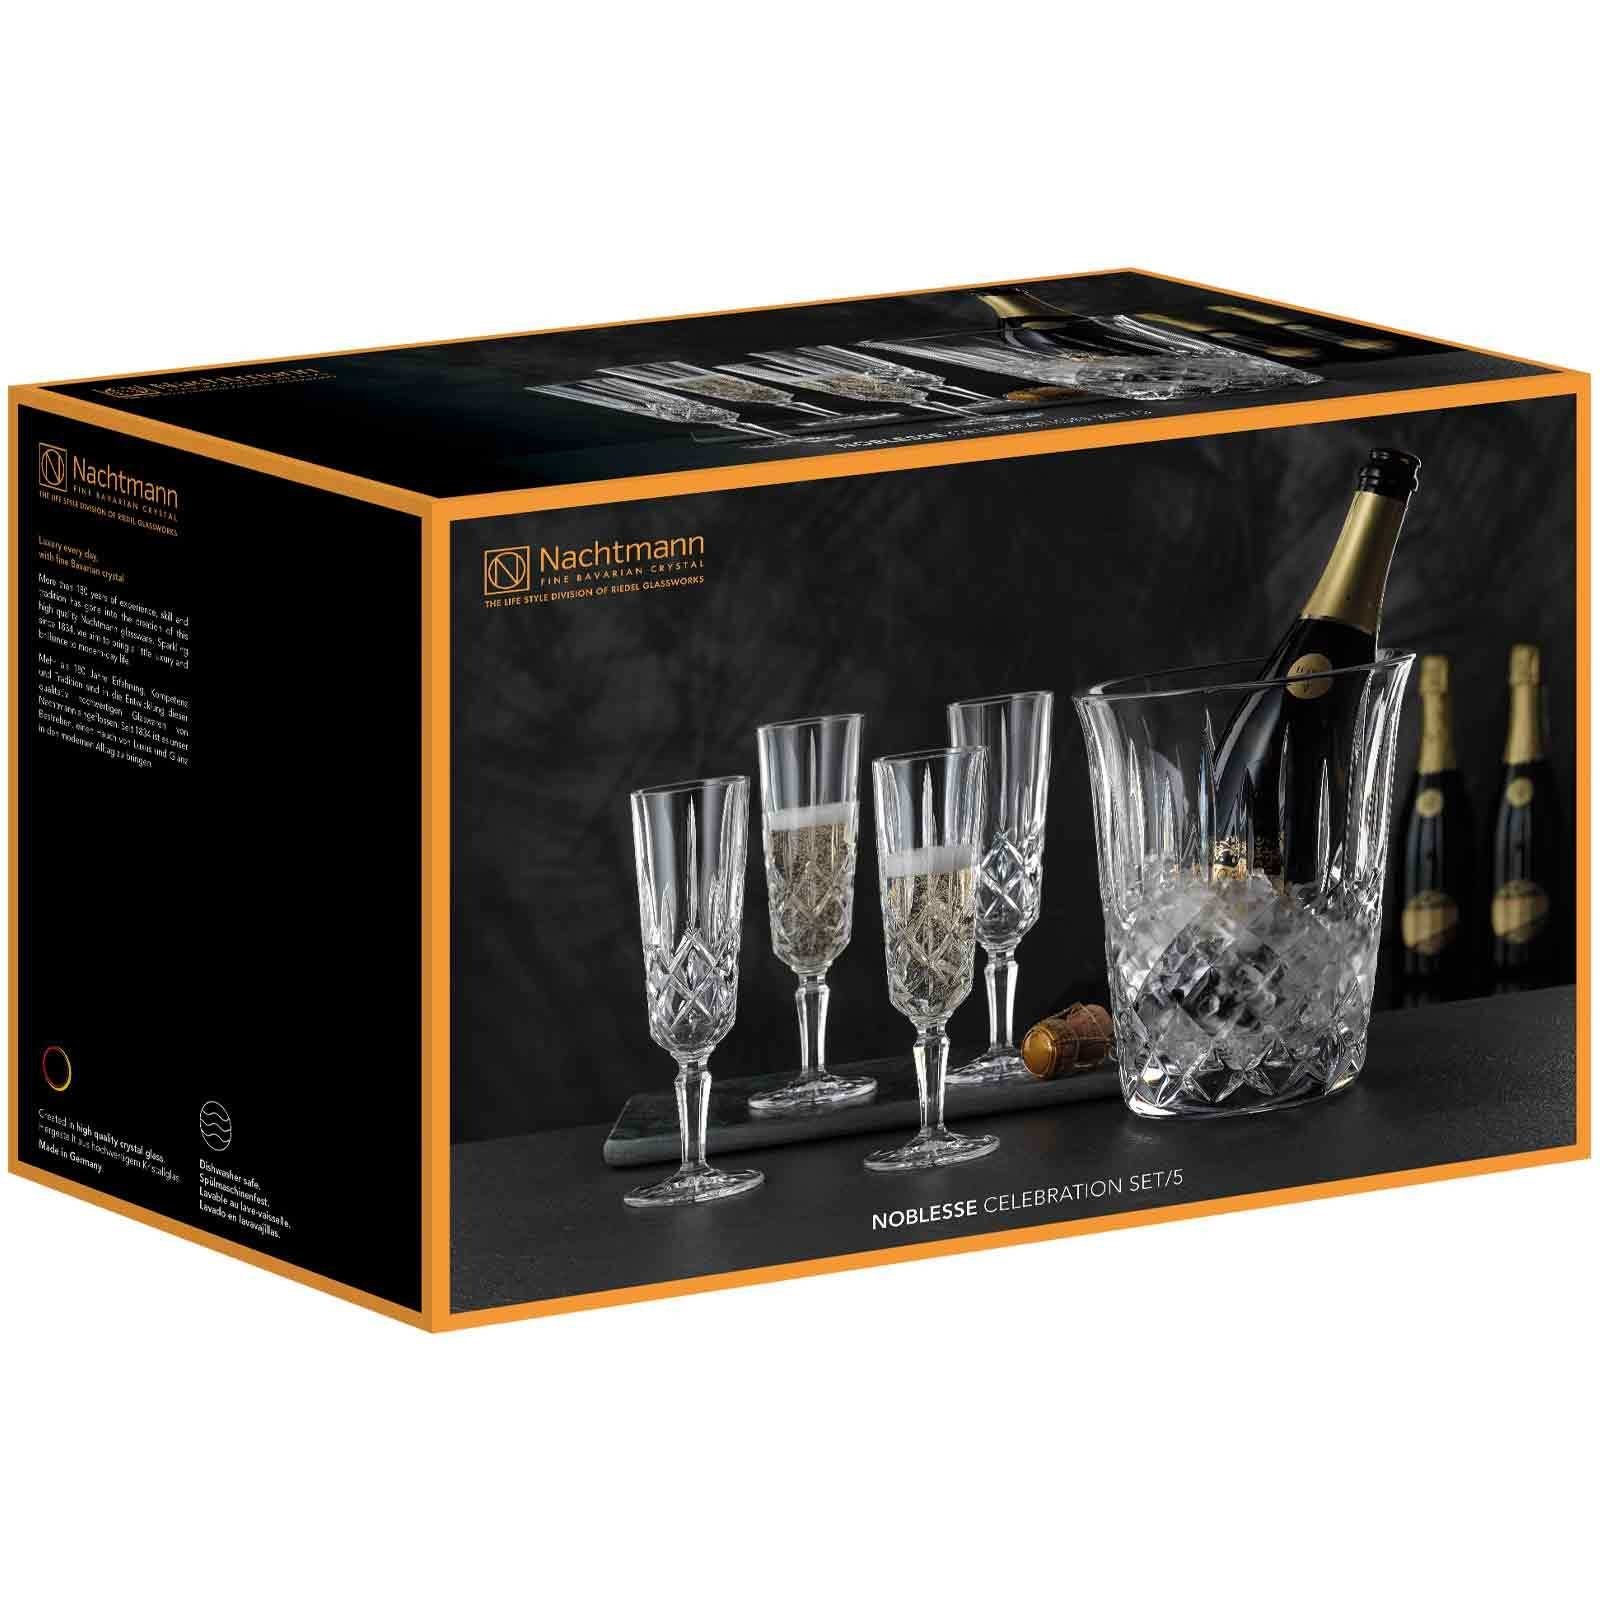 Nachtmann Champagnerglas Celebration Noblesse Set, Glas